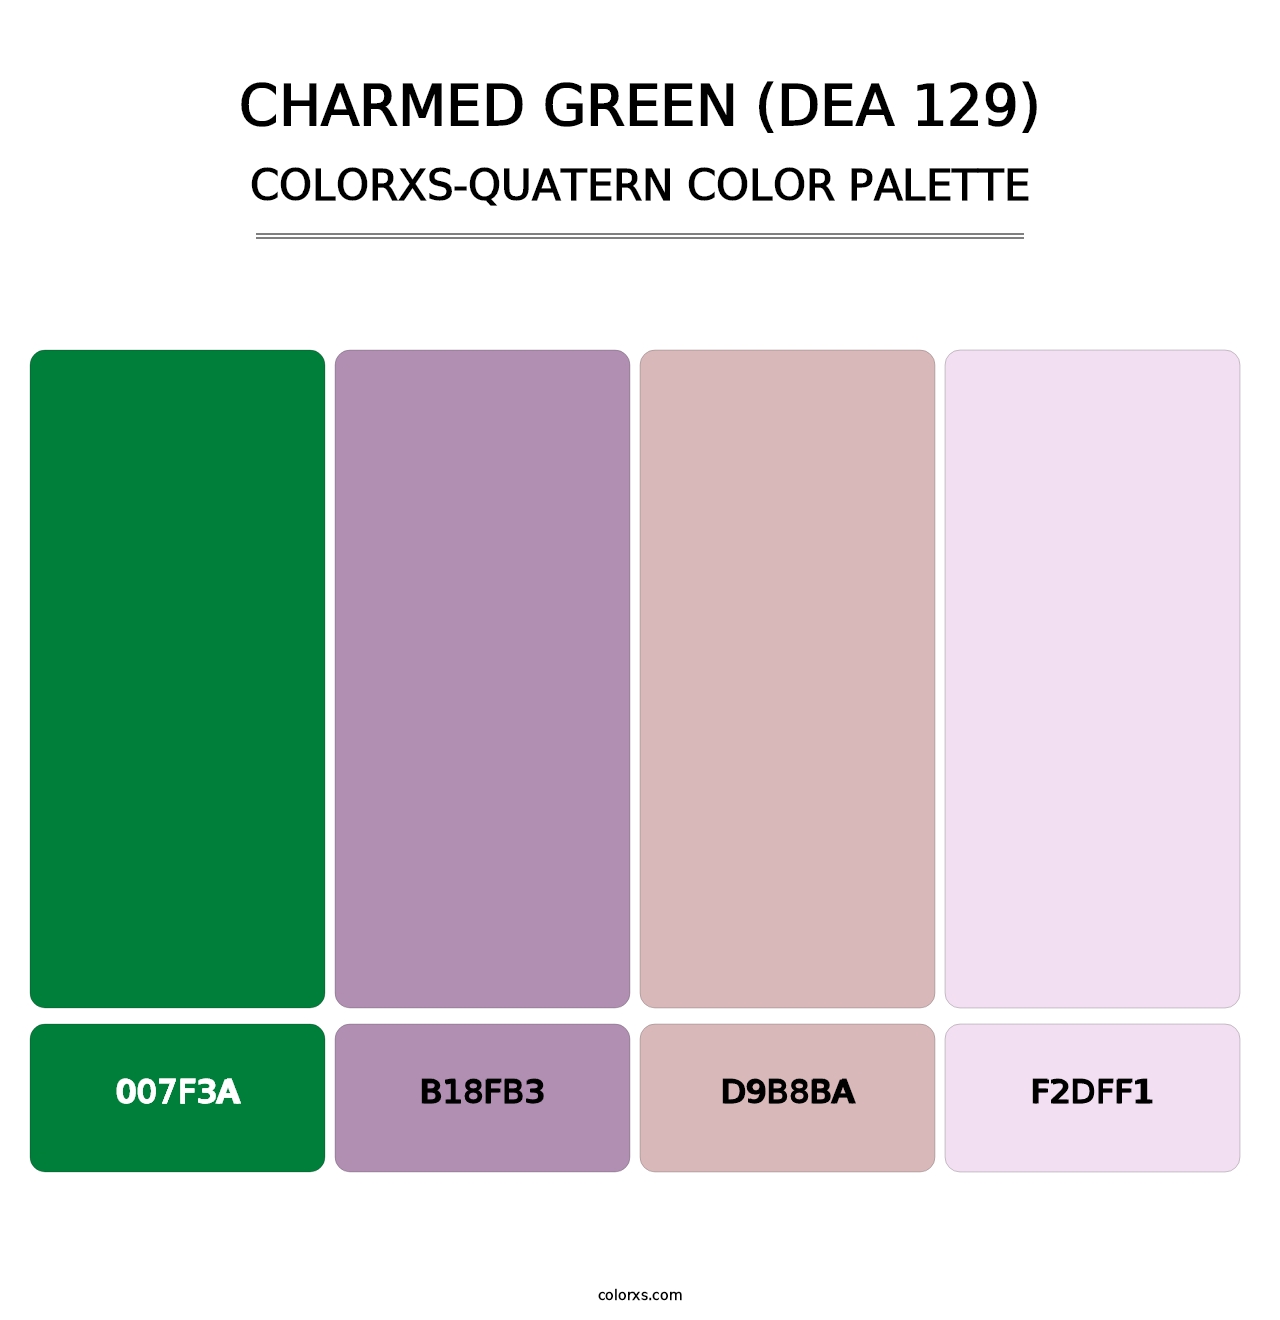 Charmed Green (DEA 129) - Colorxs Quatern Palette